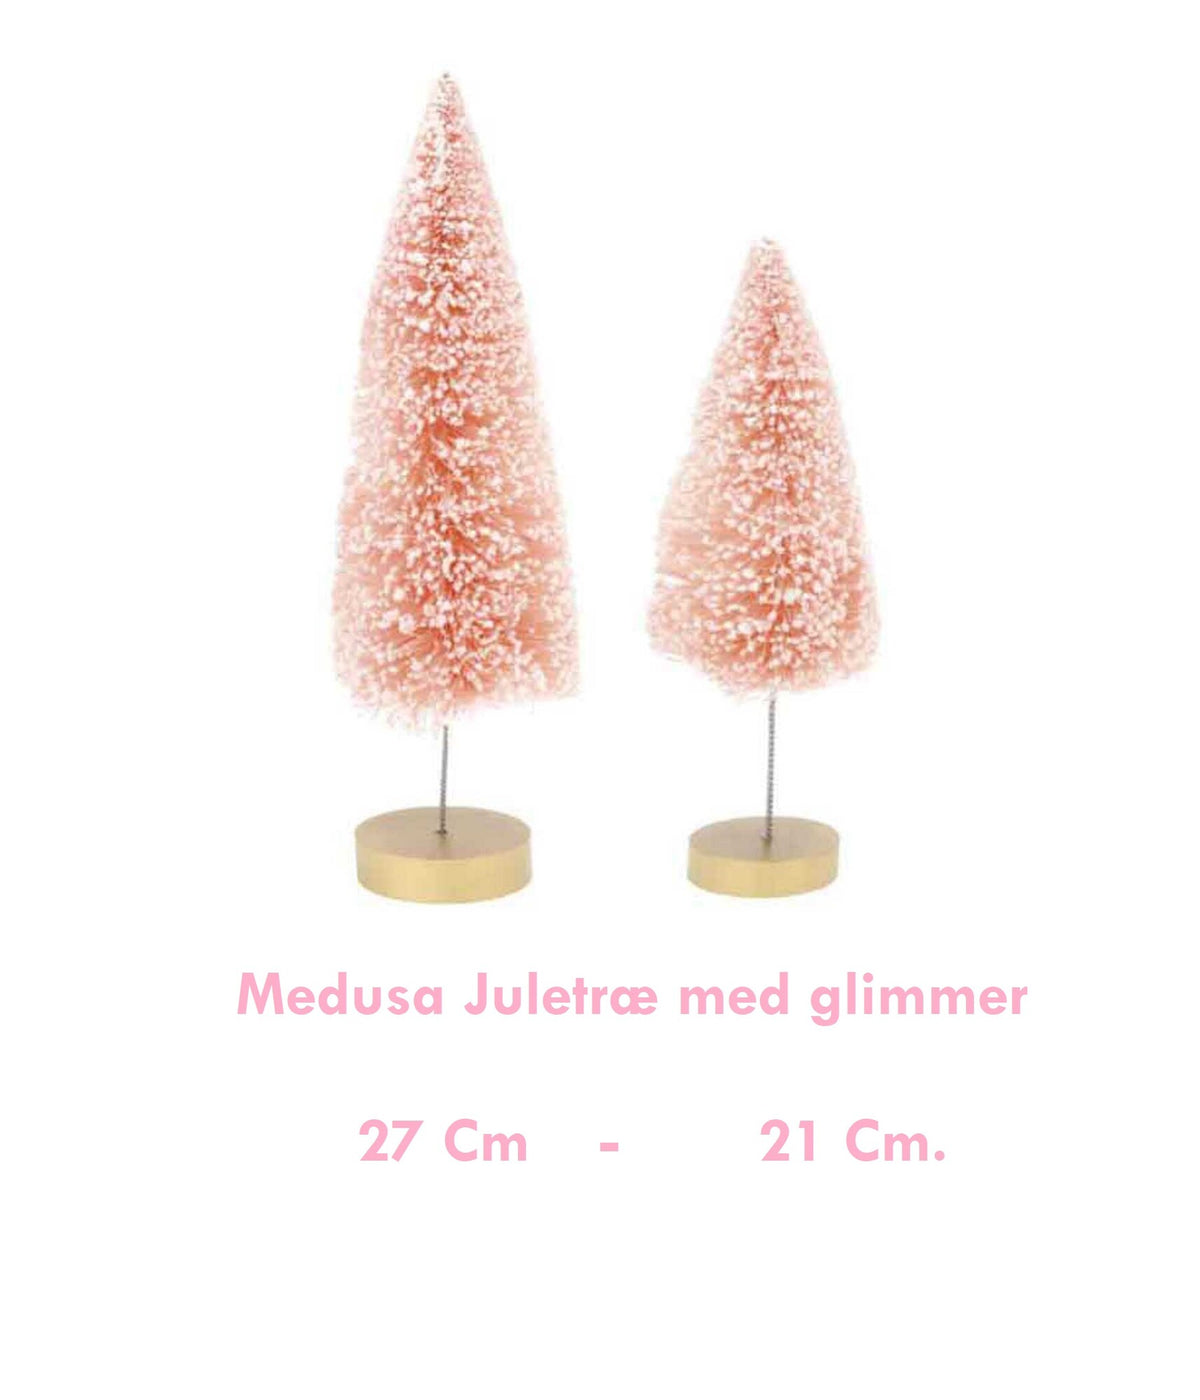 MEDUSA JULETRÆ I ROSA MED GLIMMER 21 cm